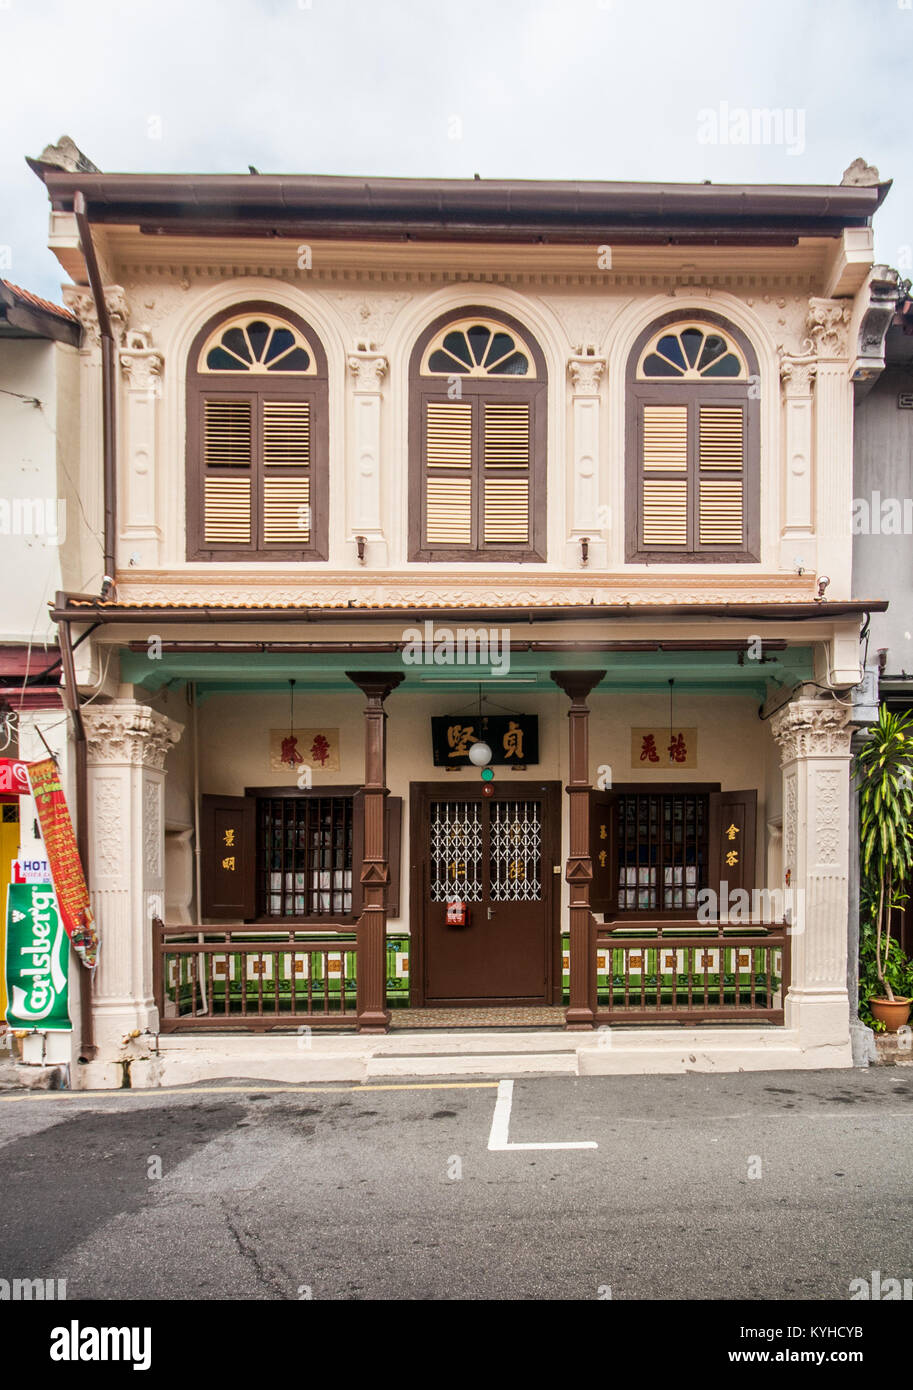 L'architecture de la CINA Peranakan, Malacca, Malaisie Banque D'Images